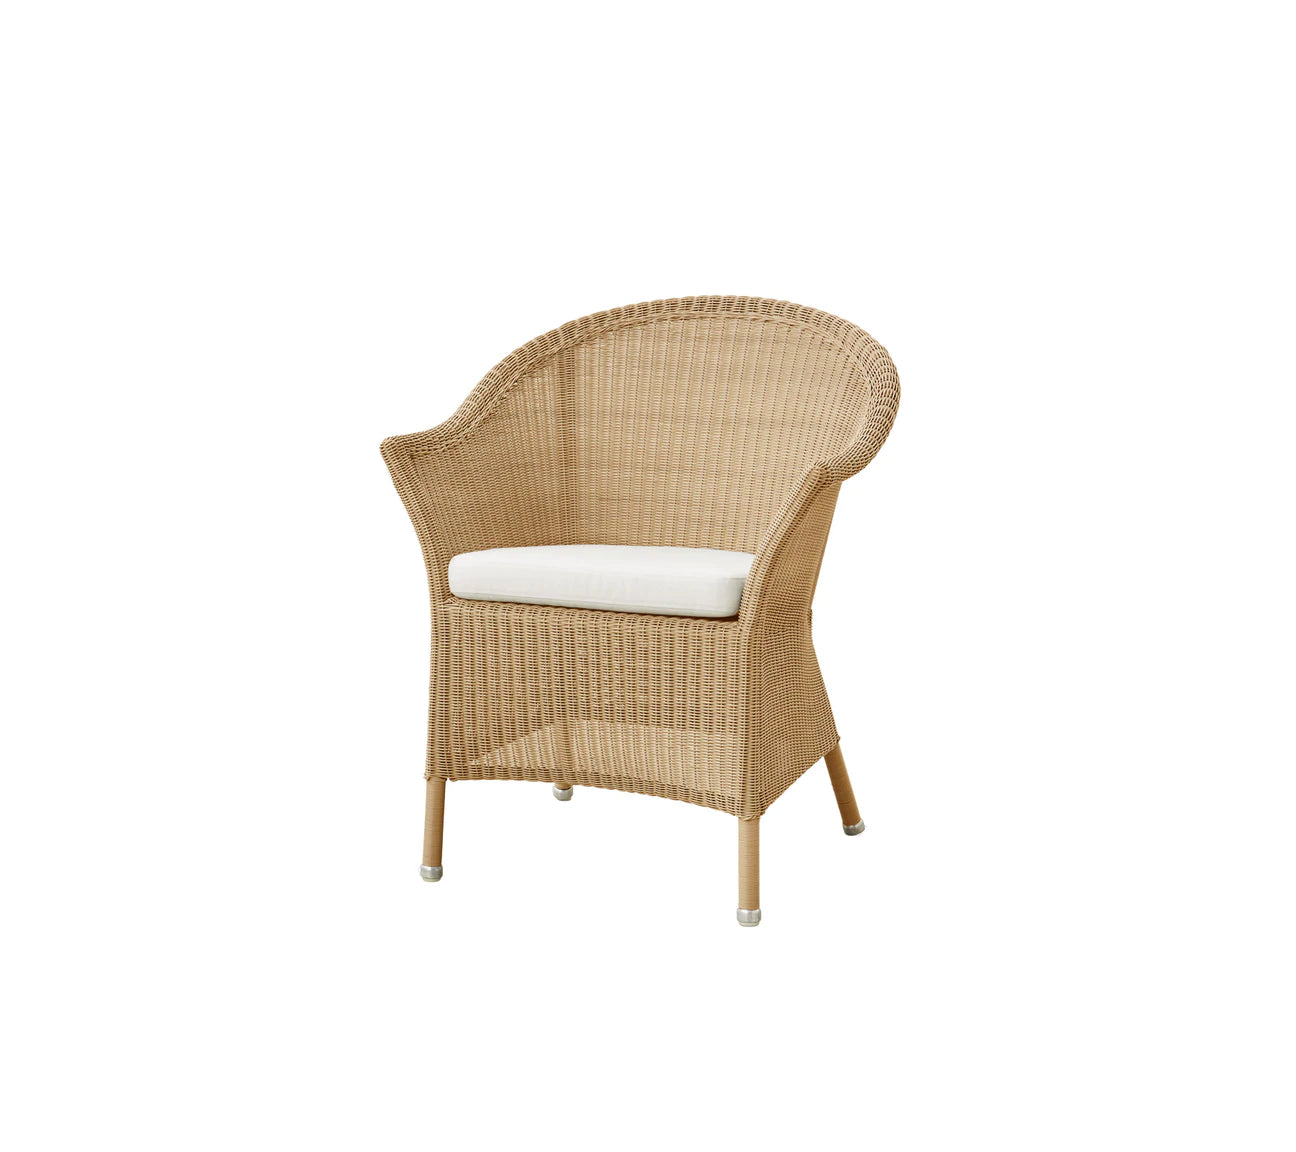 Cane-Line Lansing Stuhl, weiße Sitzpolster